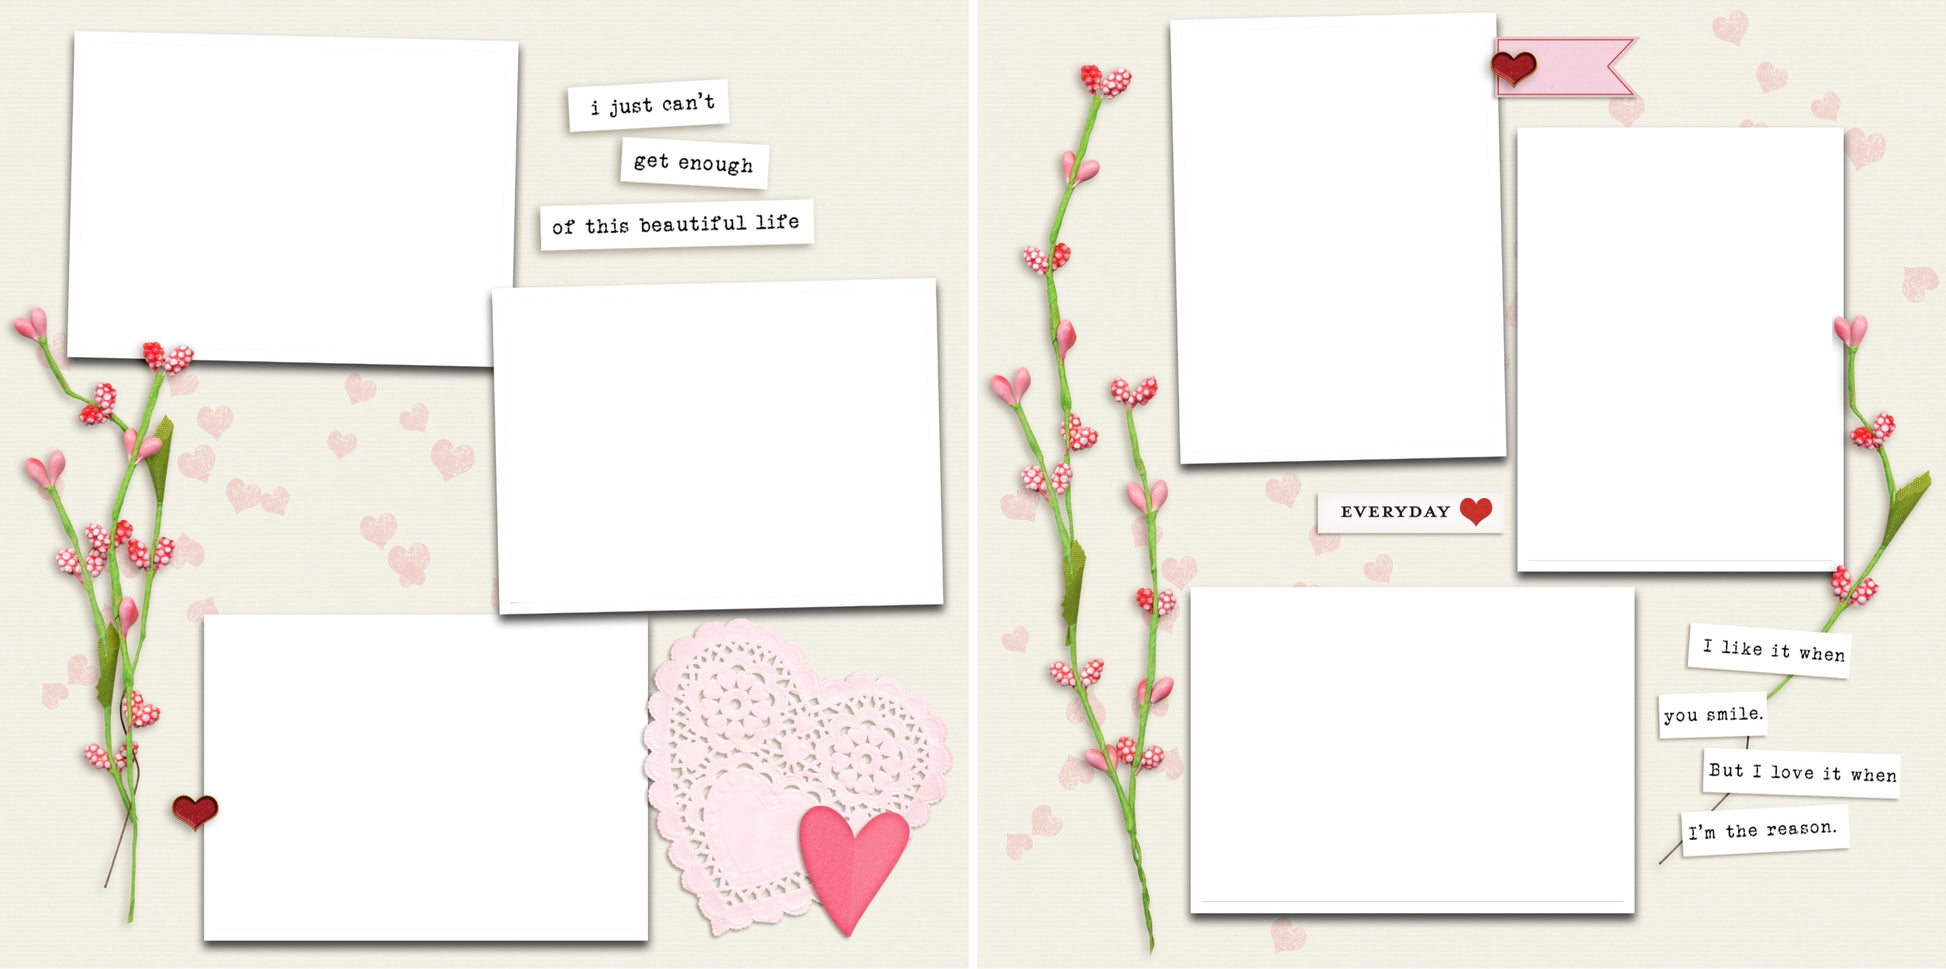 Beautiful Life - Digital Scrapbook Pages - INSTANT DOWNLOAD - EZscrapbooks Scrapbook Layouts Love - Valentine